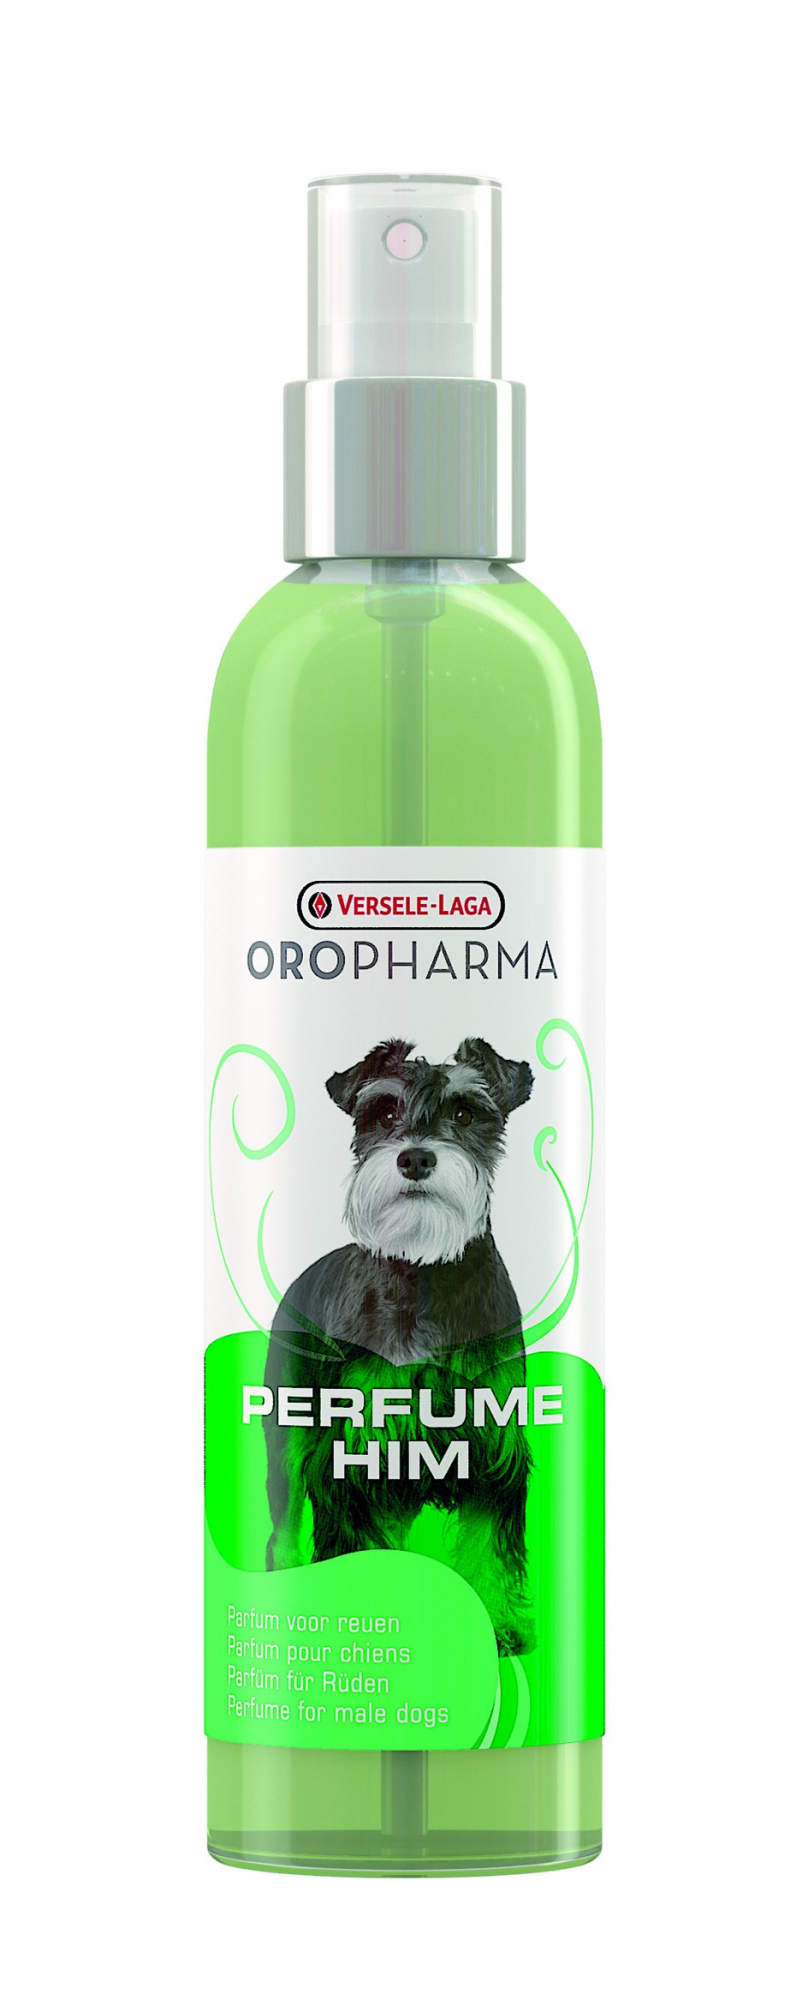 Hundeparfum Perfume Him Oropharma 150 ml